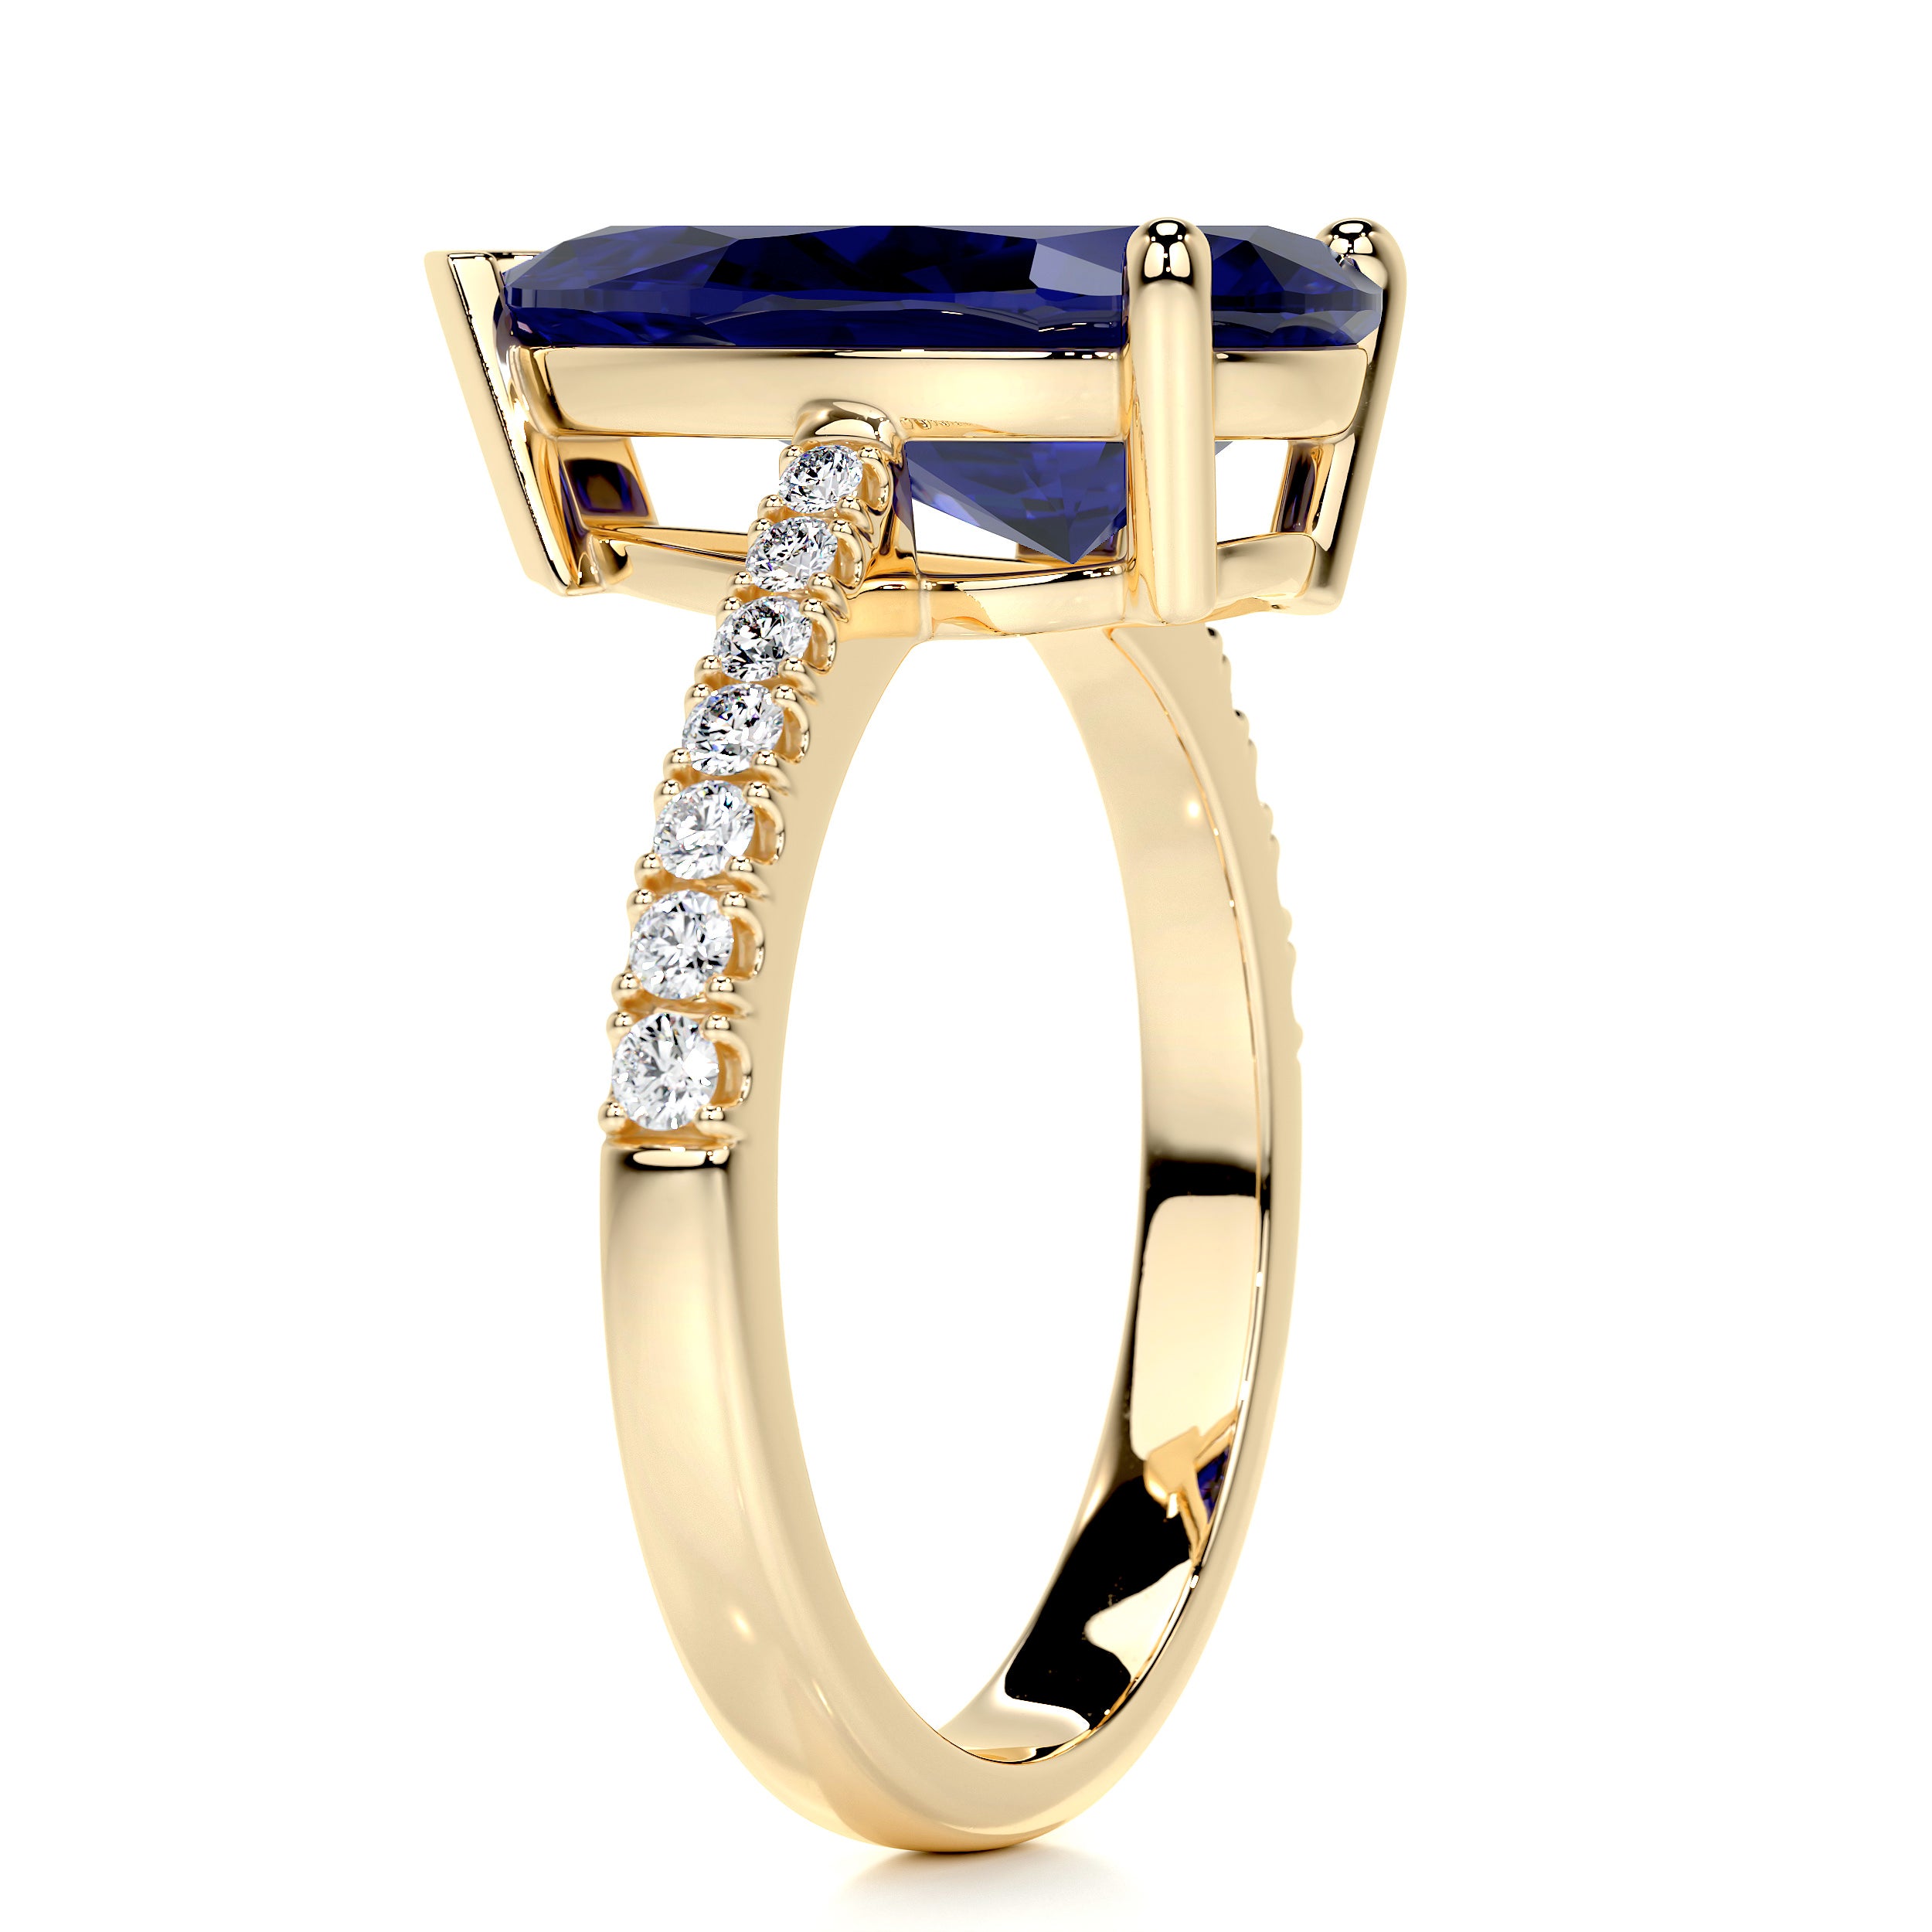 Anna Gemstone & Diamonds Ring   (4.15 Carat) -18K Yellow Gold